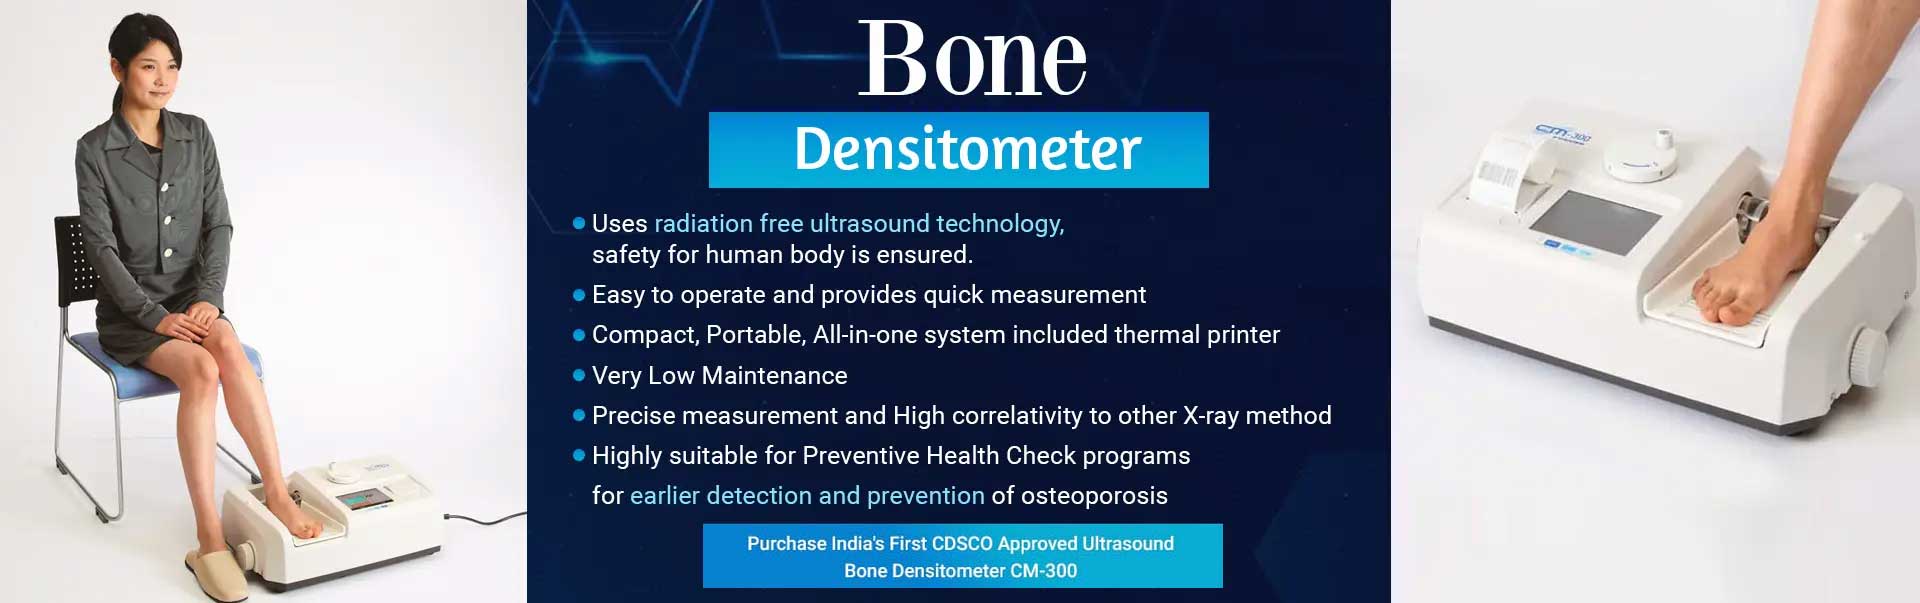 Bone Densitometer Manufacturers in Mumbai